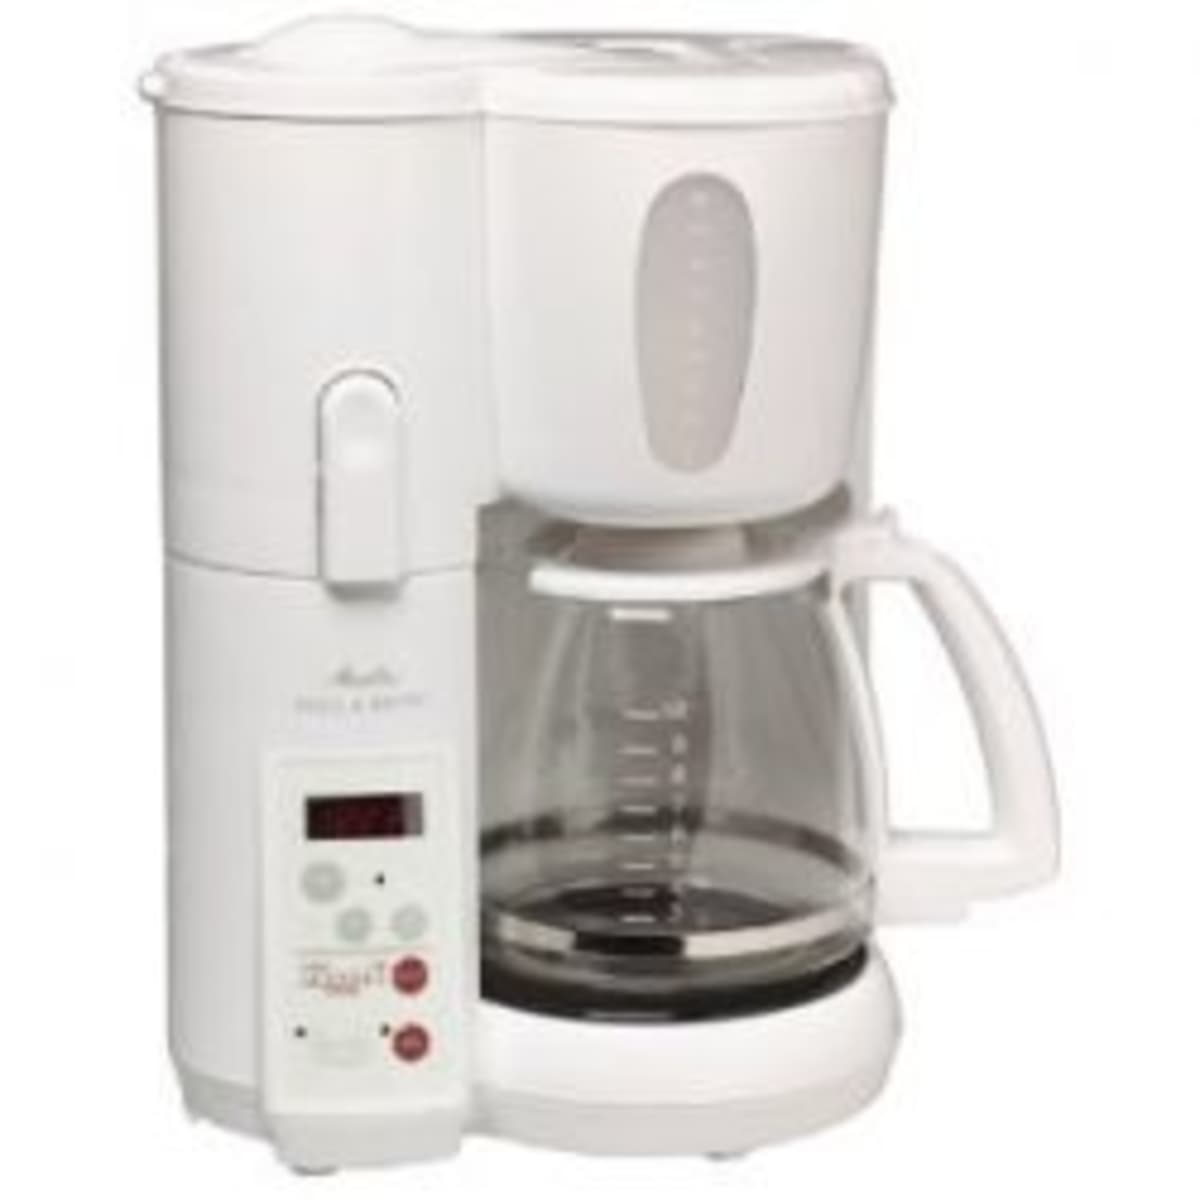 BLACK+DECKER Mill & Brew 12-Cup Programmable Coffee Maker - CM5000B - Used